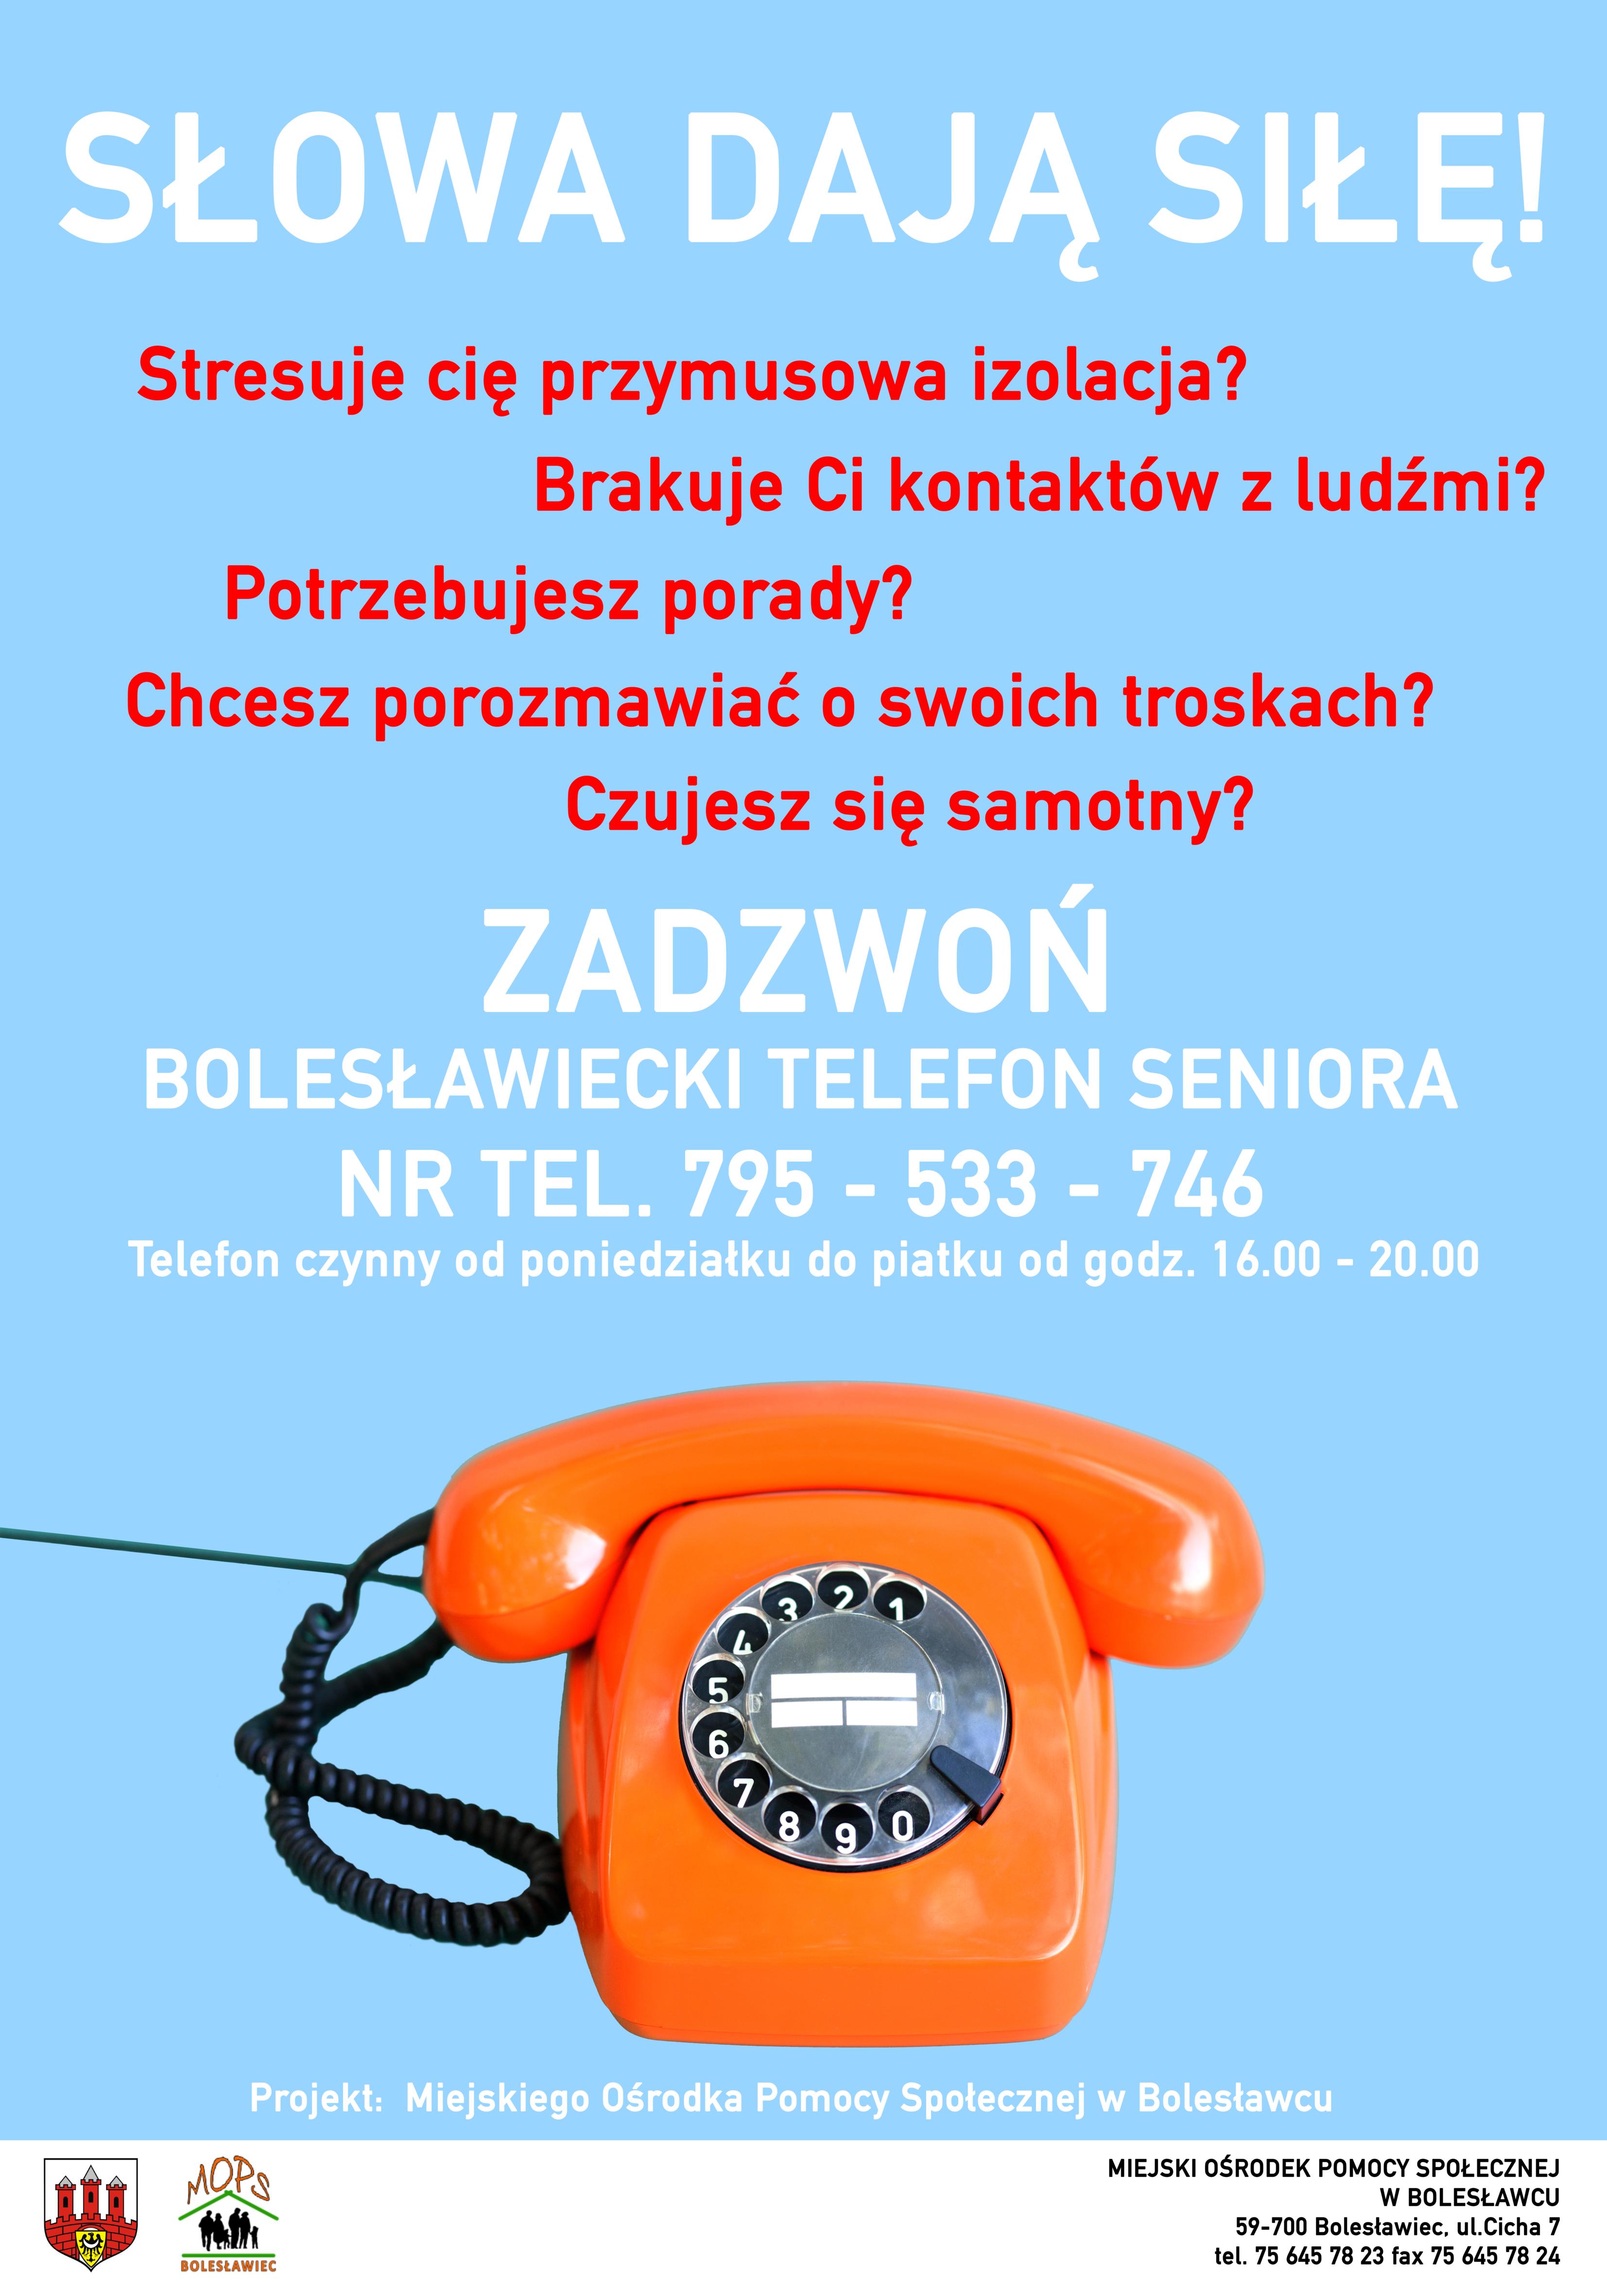  Bolesławiecki Telefon Seniora.jpg 